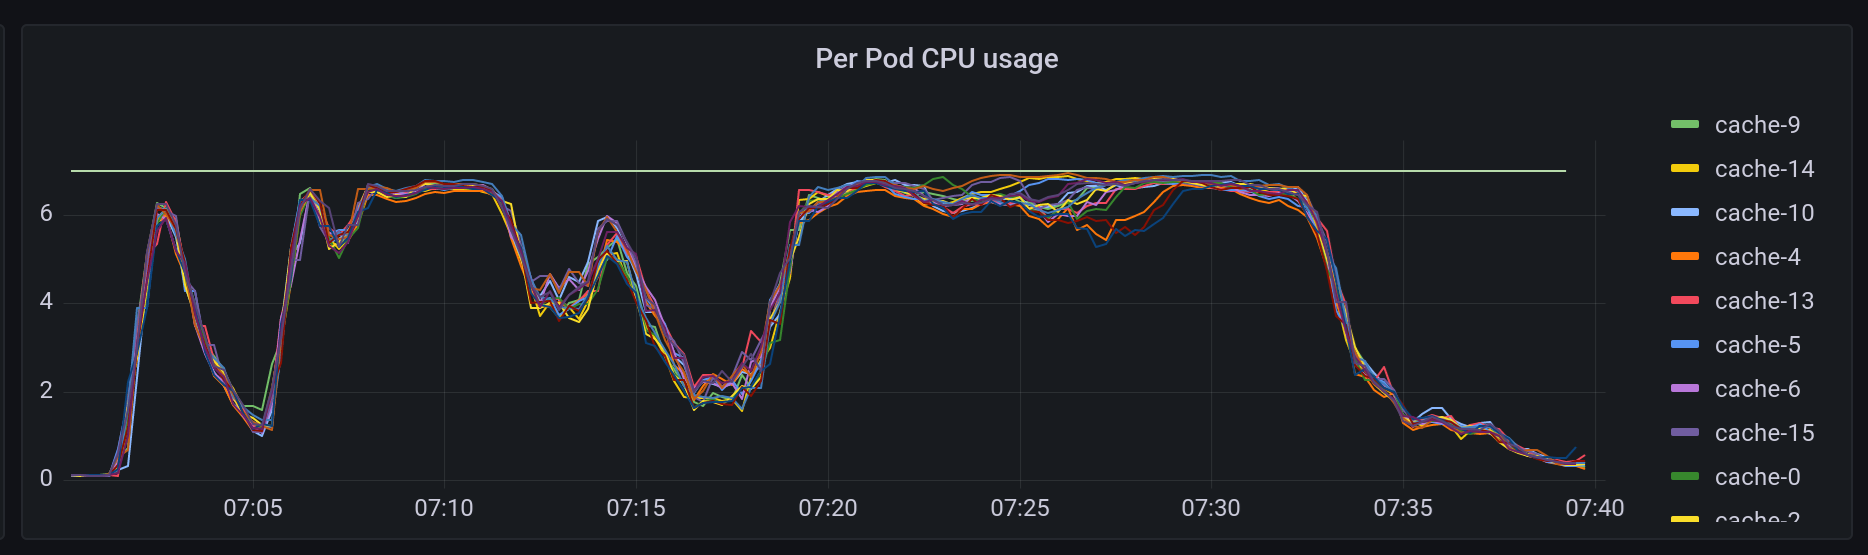 Per Pod CPU usage graph